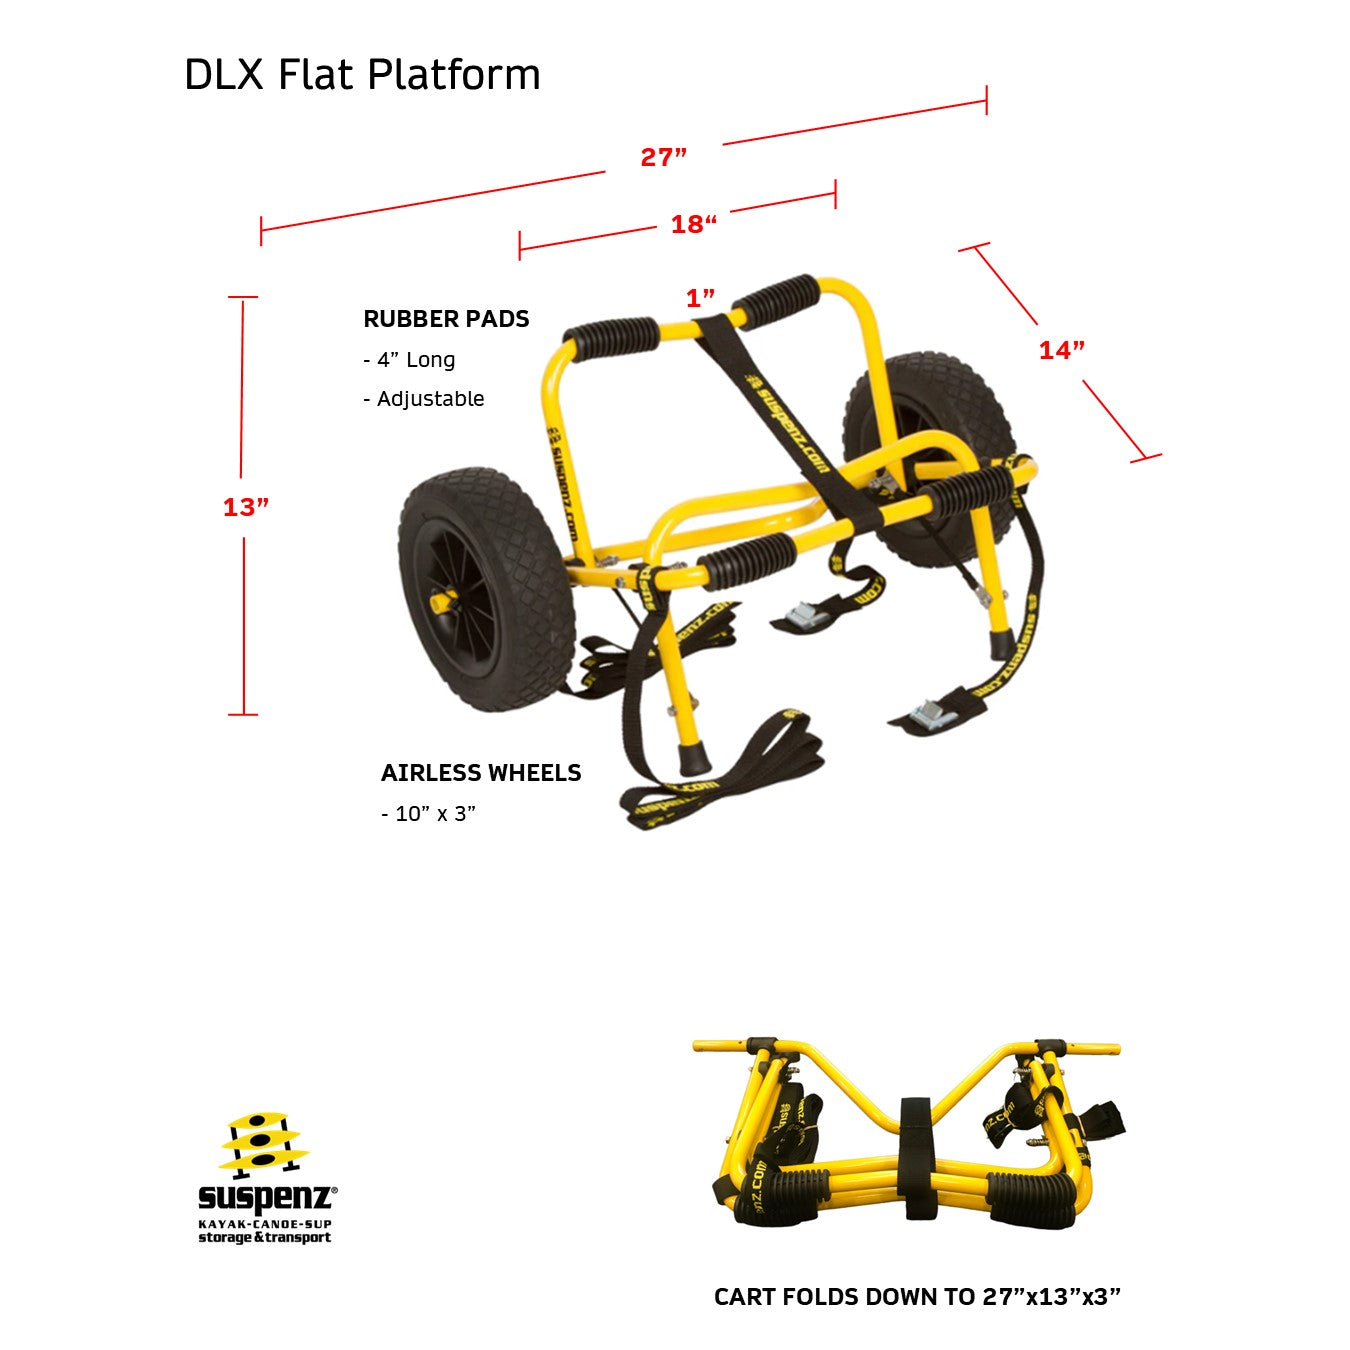 DLX Flat Platform dimensions